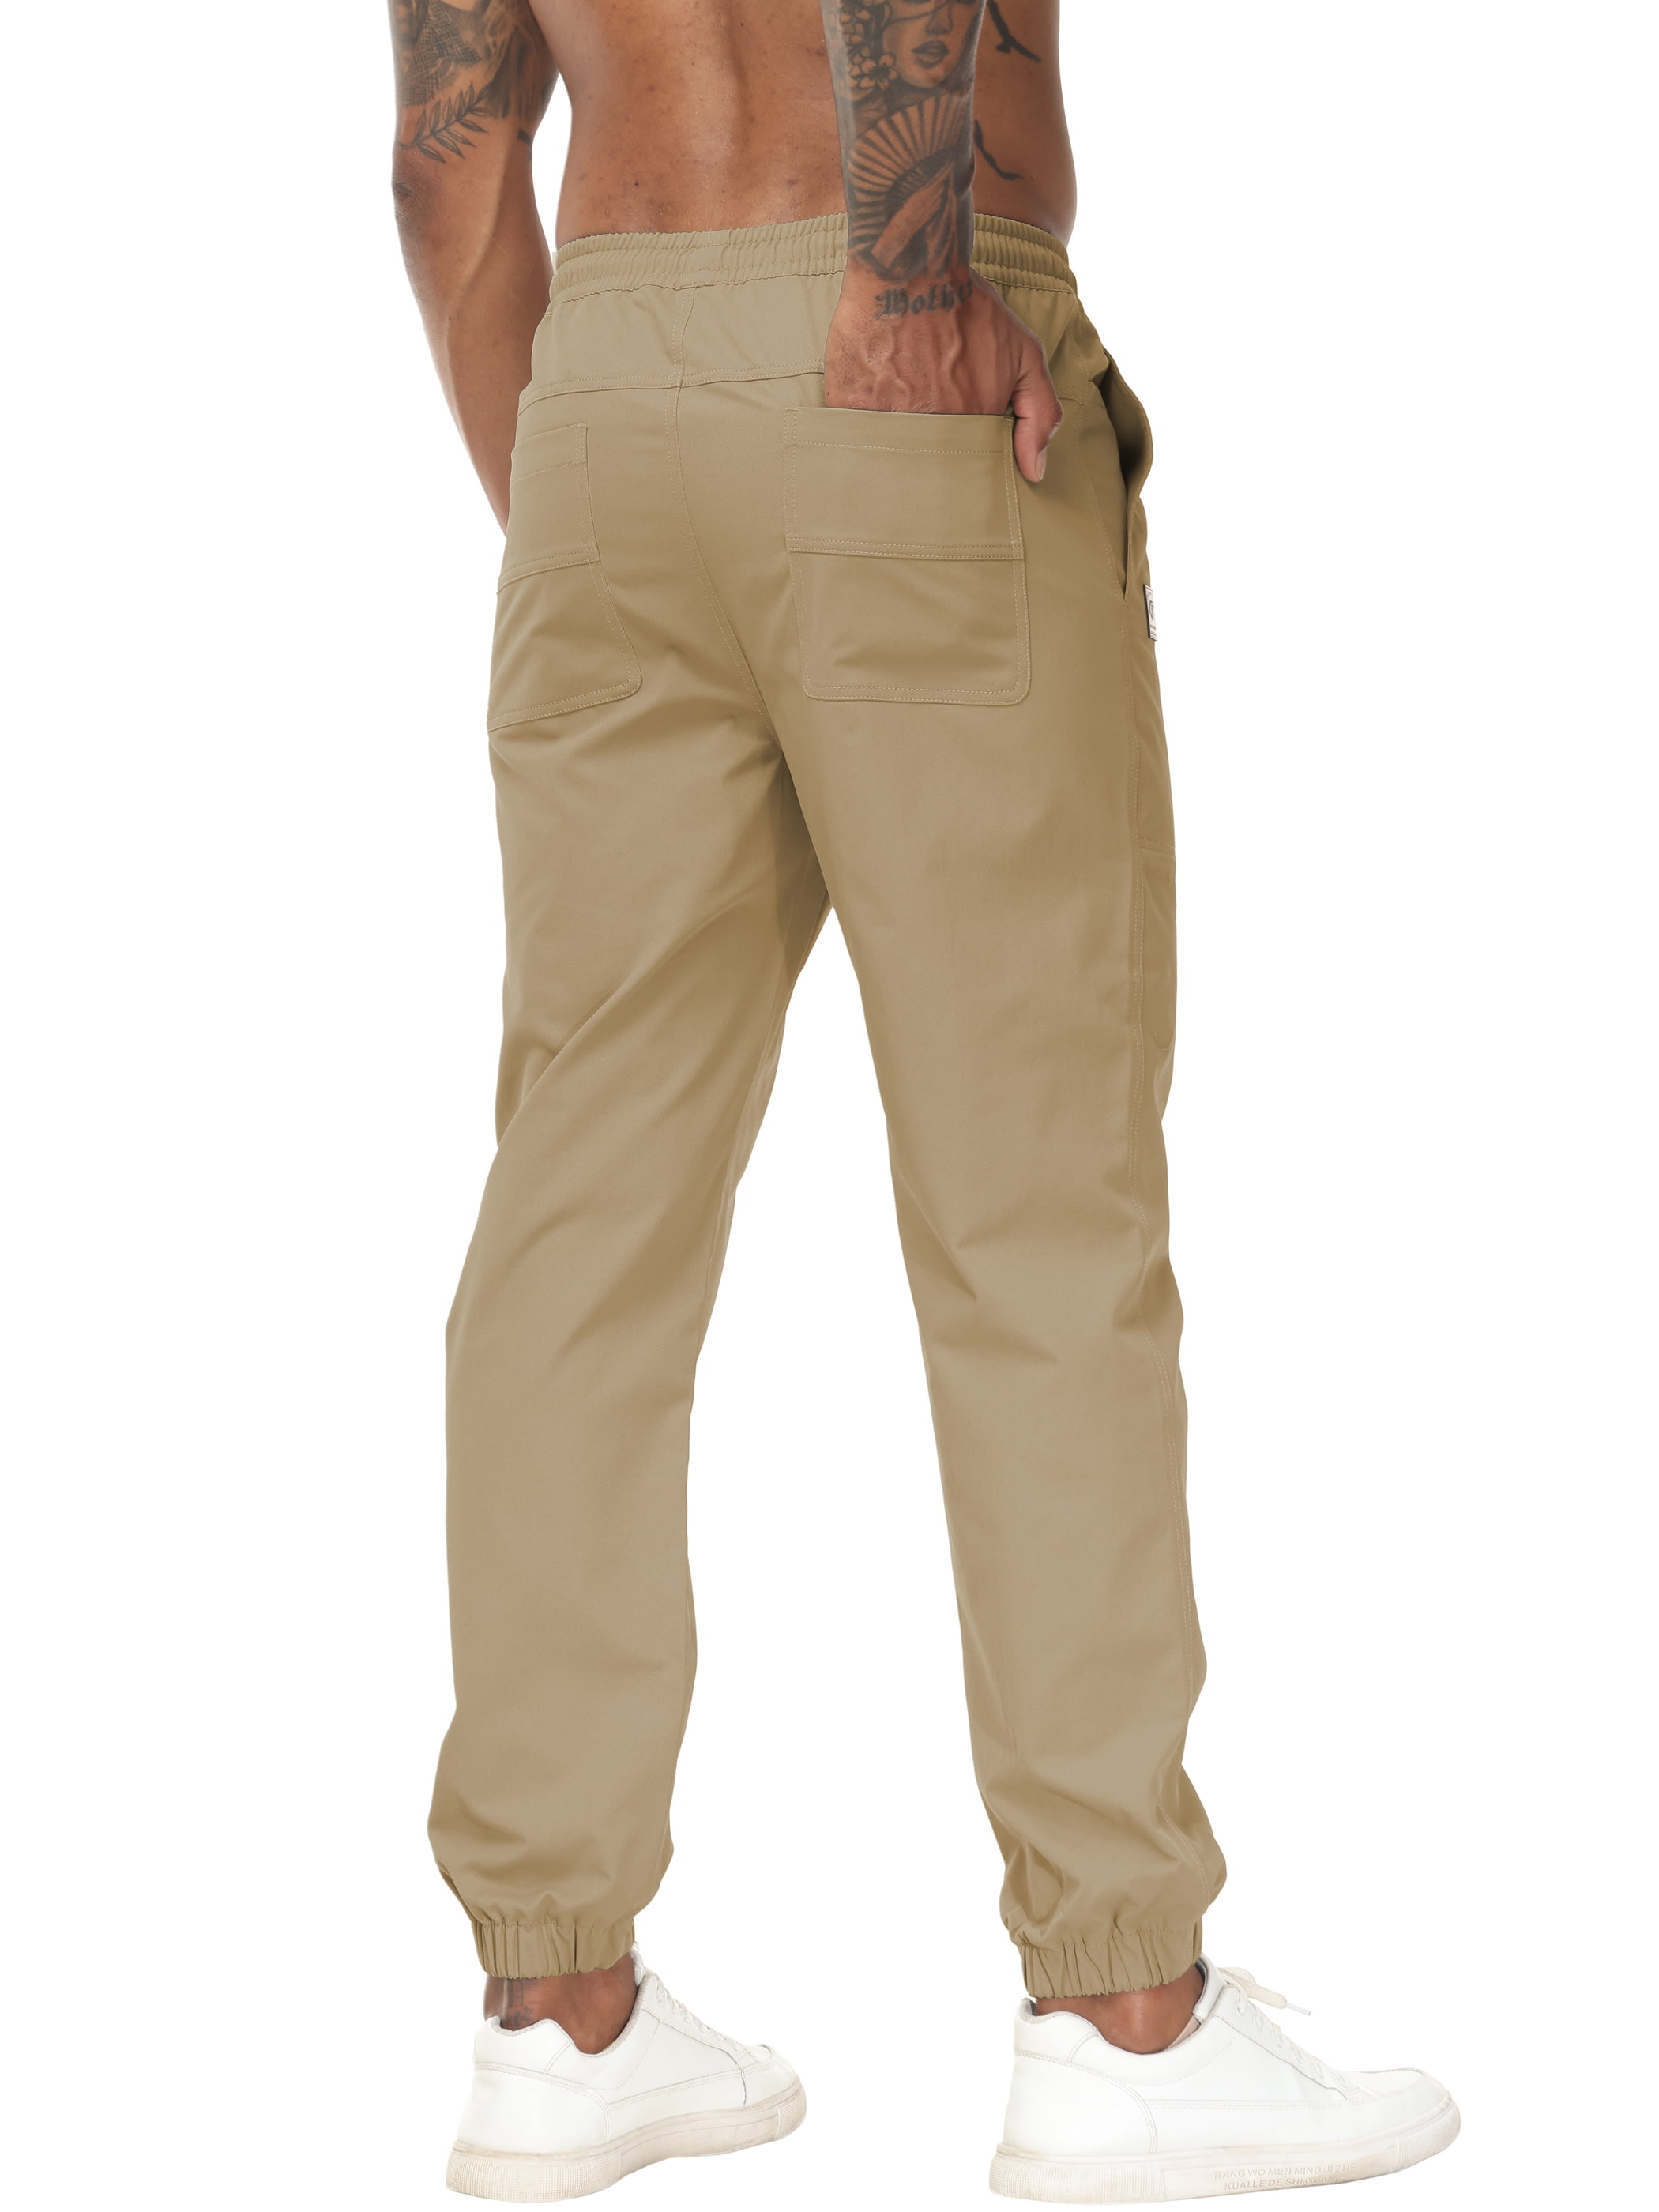 Buy RAREBONE Men's Cargo Pants 100% Cotton Relaxed-Fit Trousers Elastic  Waistband Lightweight Work Sweatpants Multi Pockets, Khaki, Large at